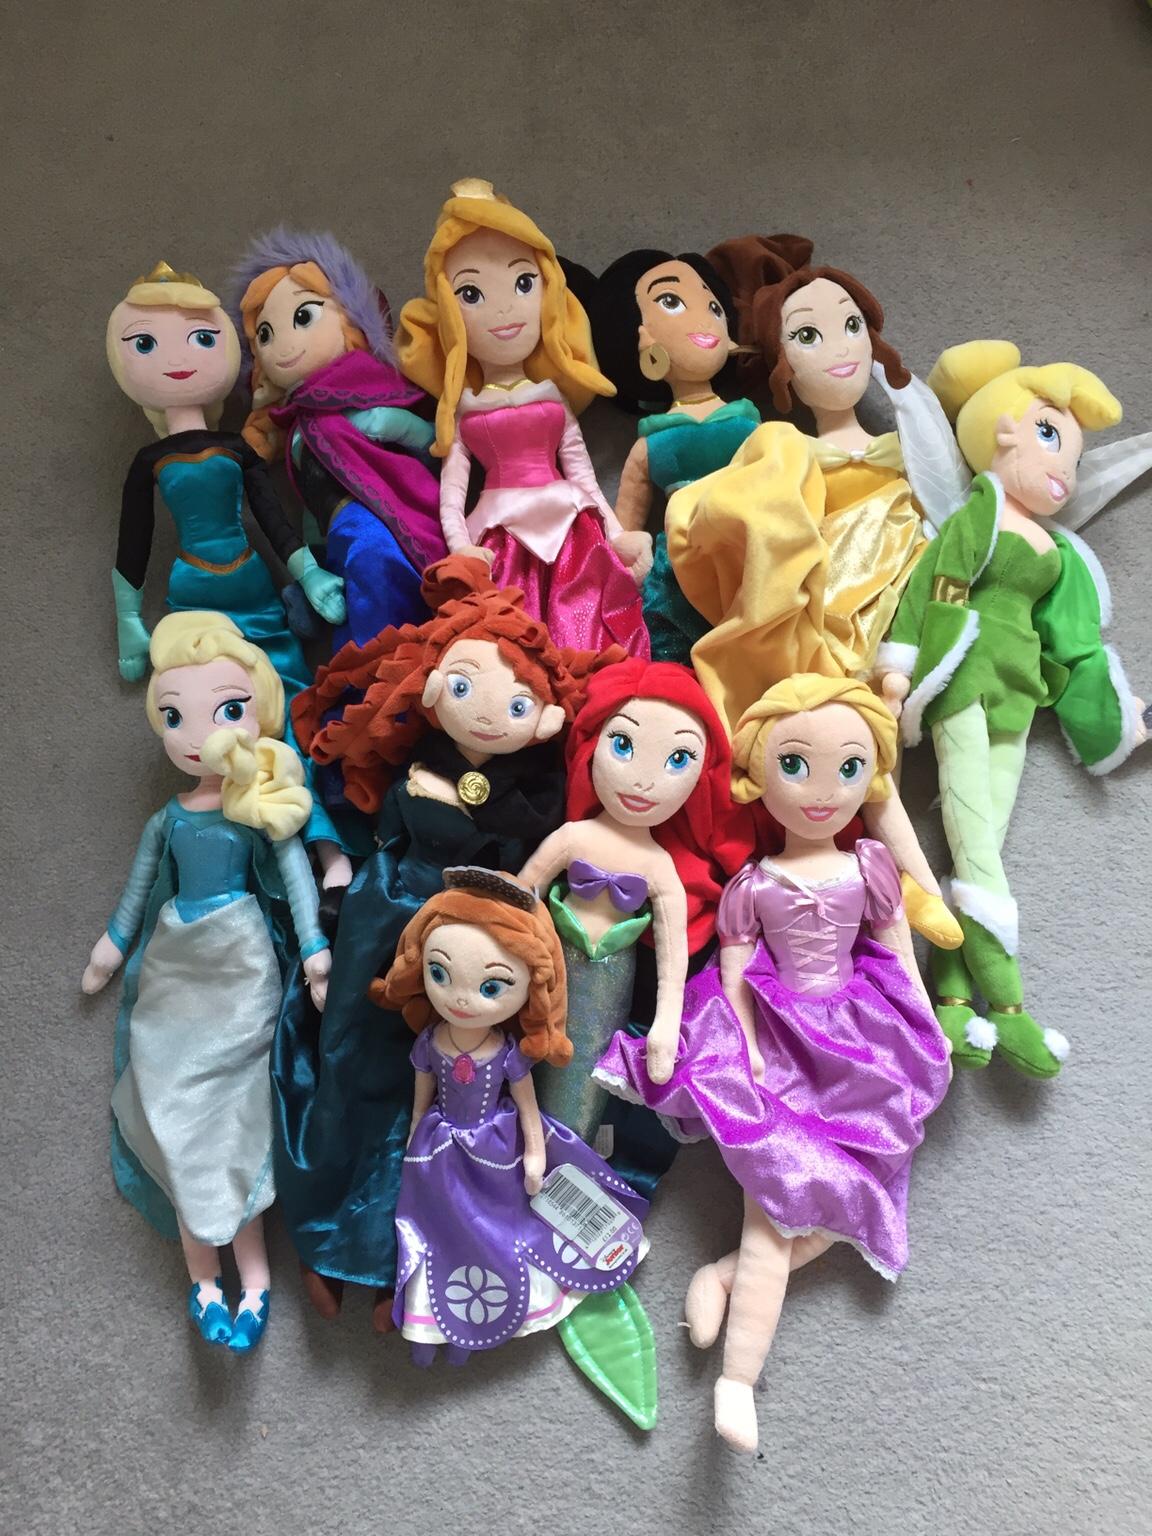 Disney store princess plush dolls in Wakefield for £8.00